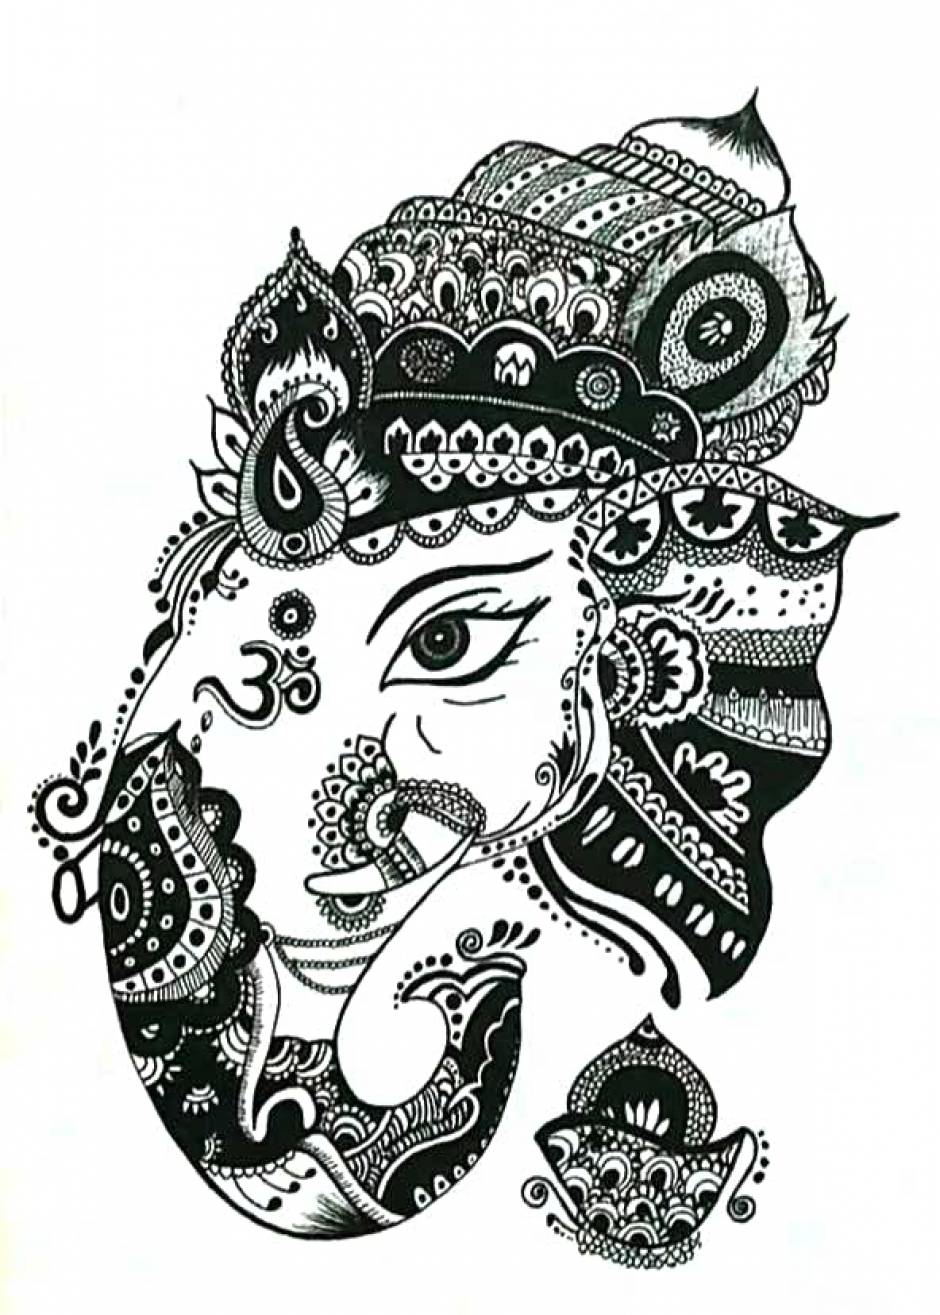 Diwali Special Drawing #diwali #diwalispecial #diwalidrawing #happydiw... |  TikTok